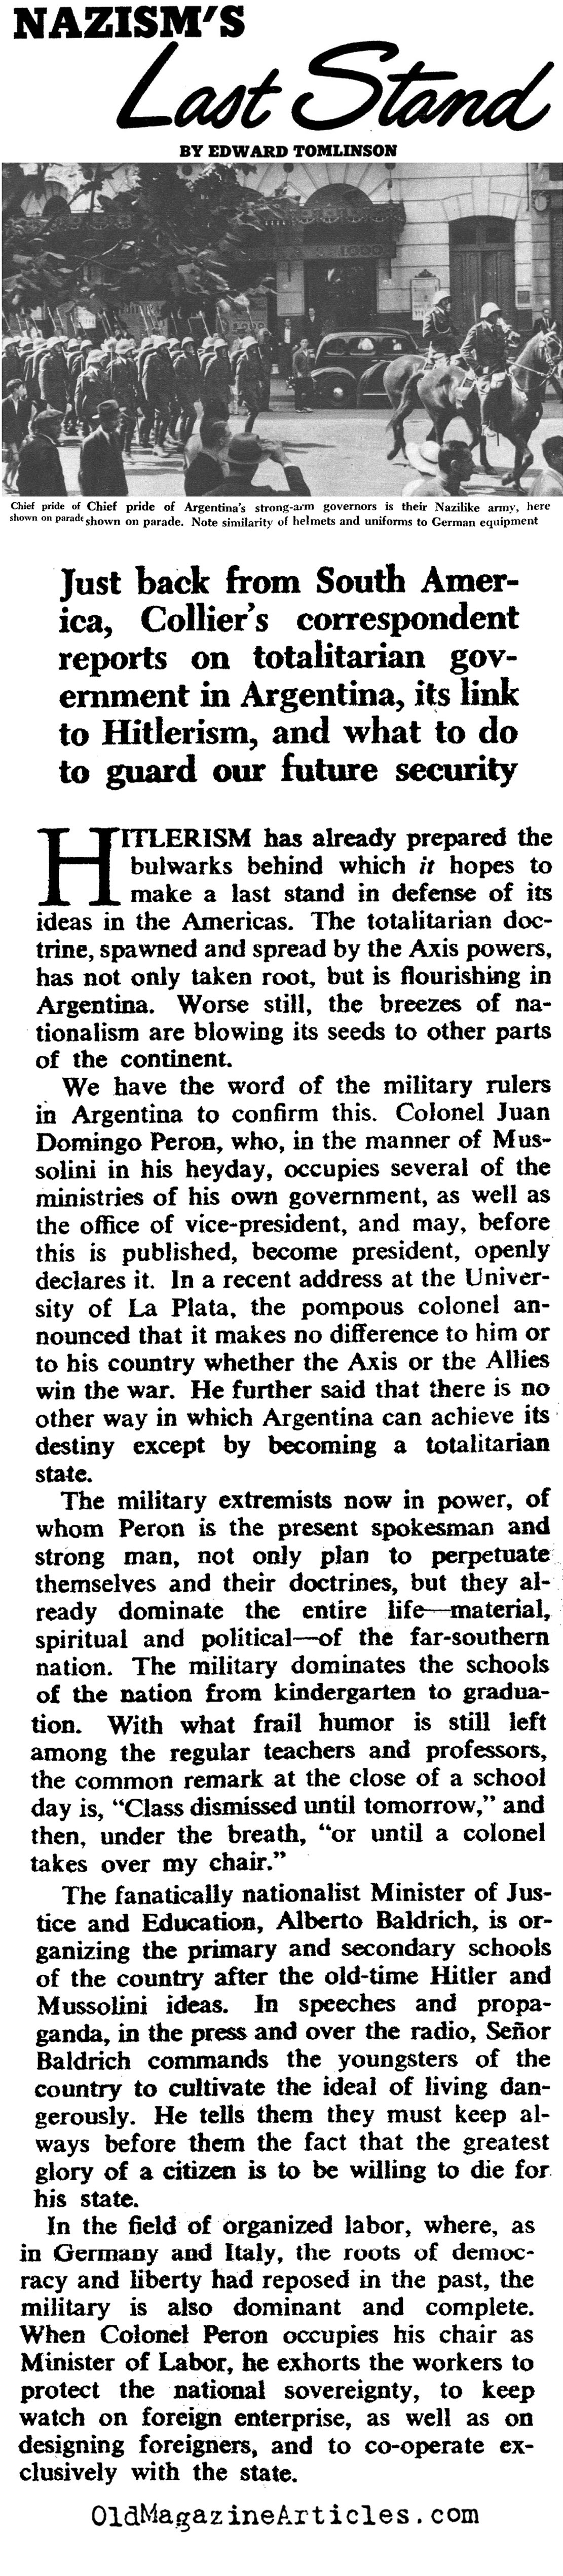 Argentina: Silent Nazi Ally (Collier's Magazine, 1944)